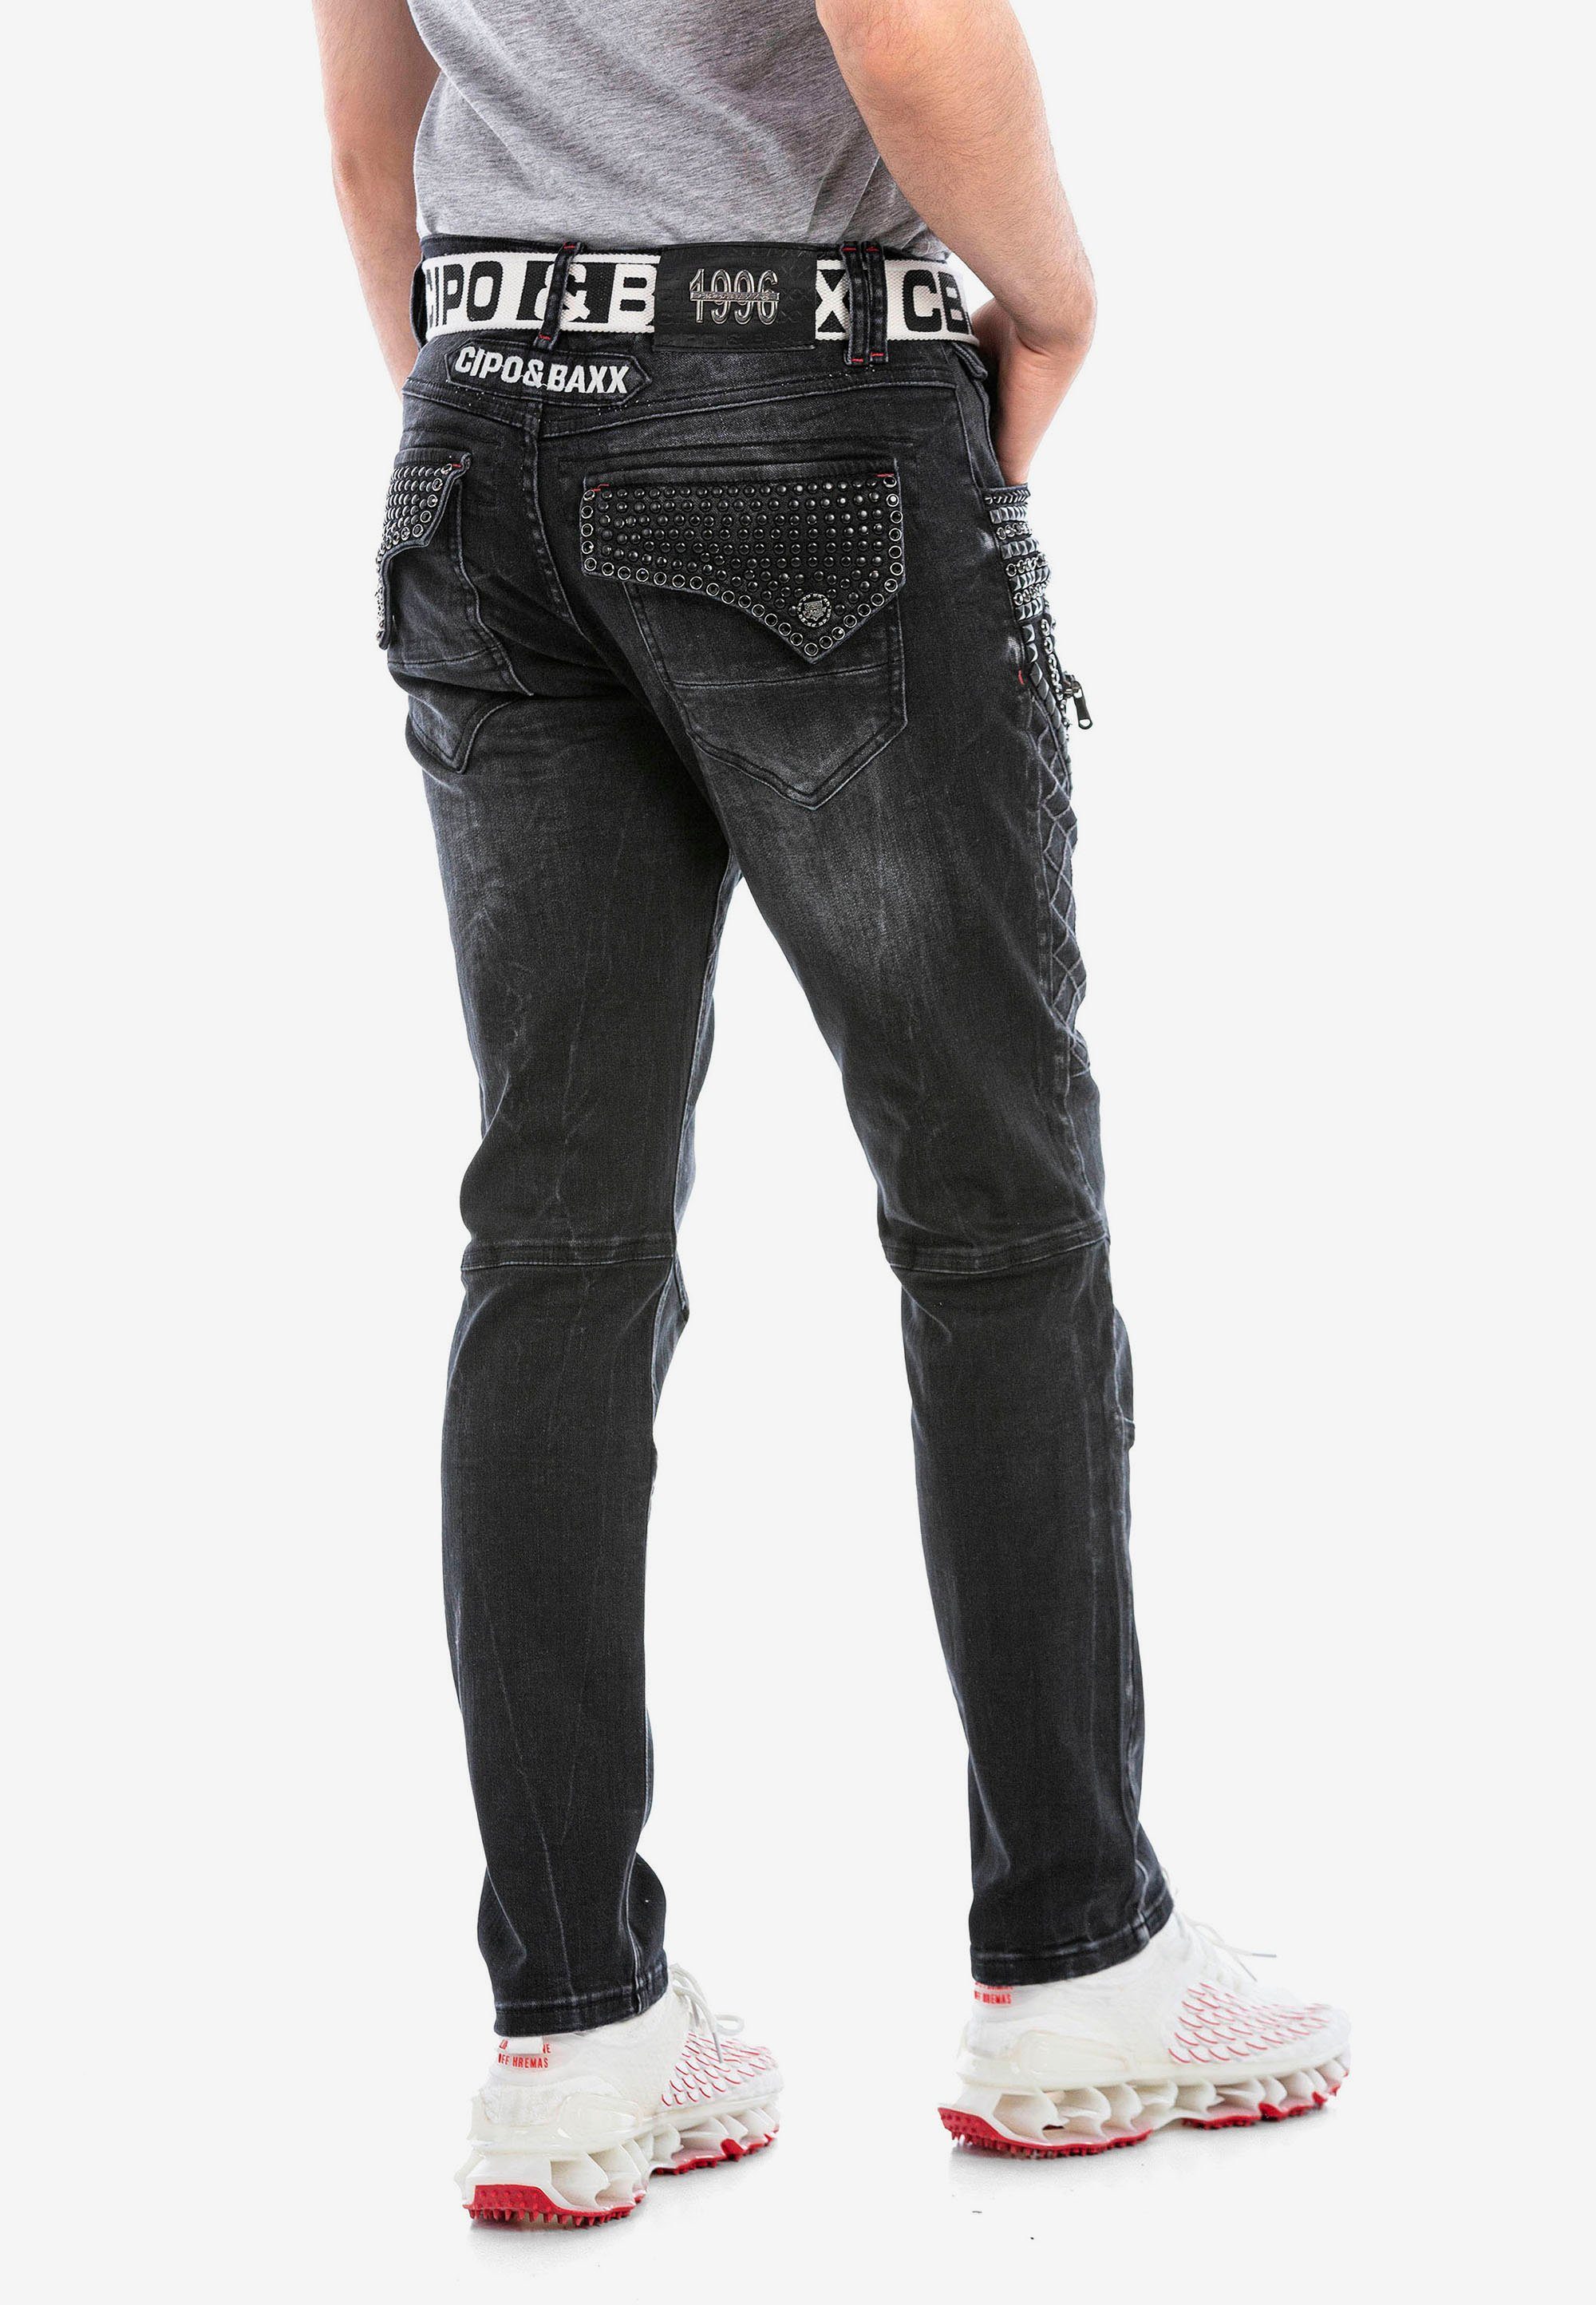 Cipo & coolen Baxx Nieten mit Slim-fit-Jeans